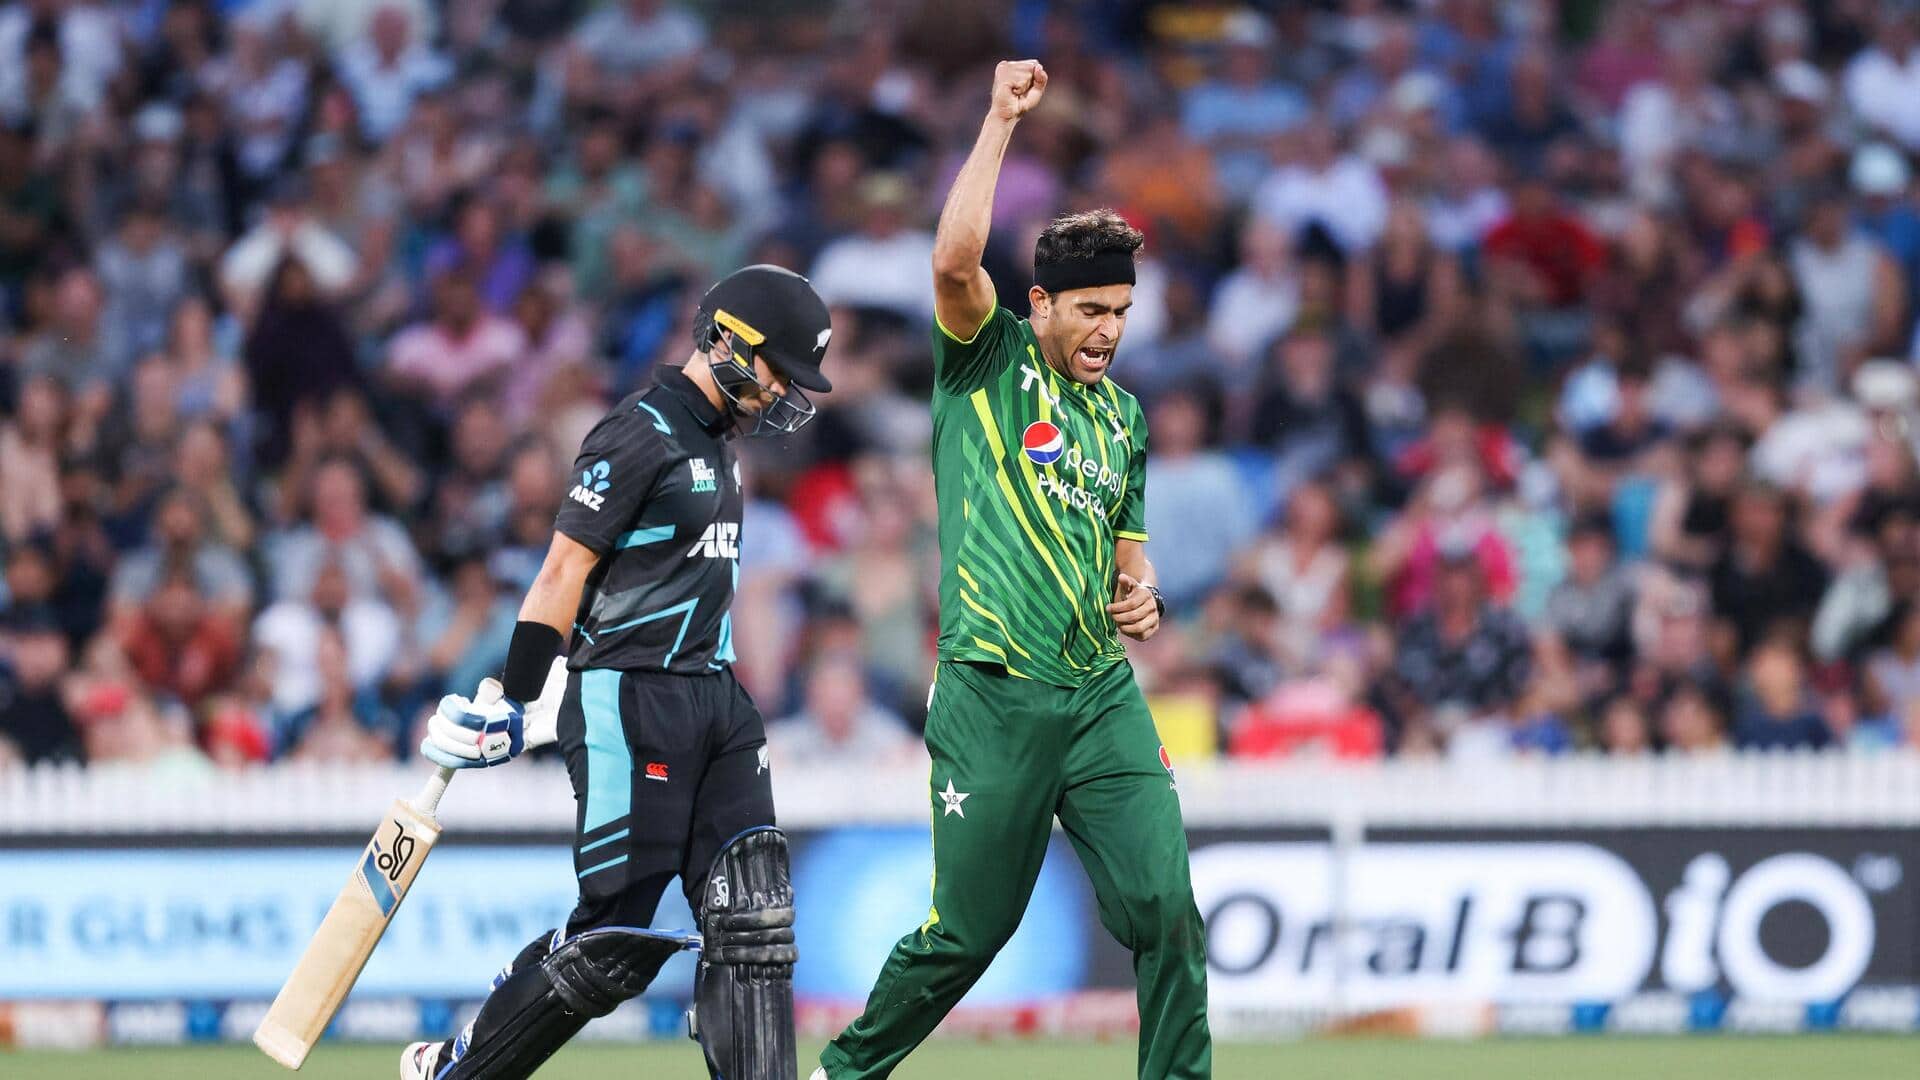 3rd T20I: Williamson-less NZ aim to seal series against Pakistan